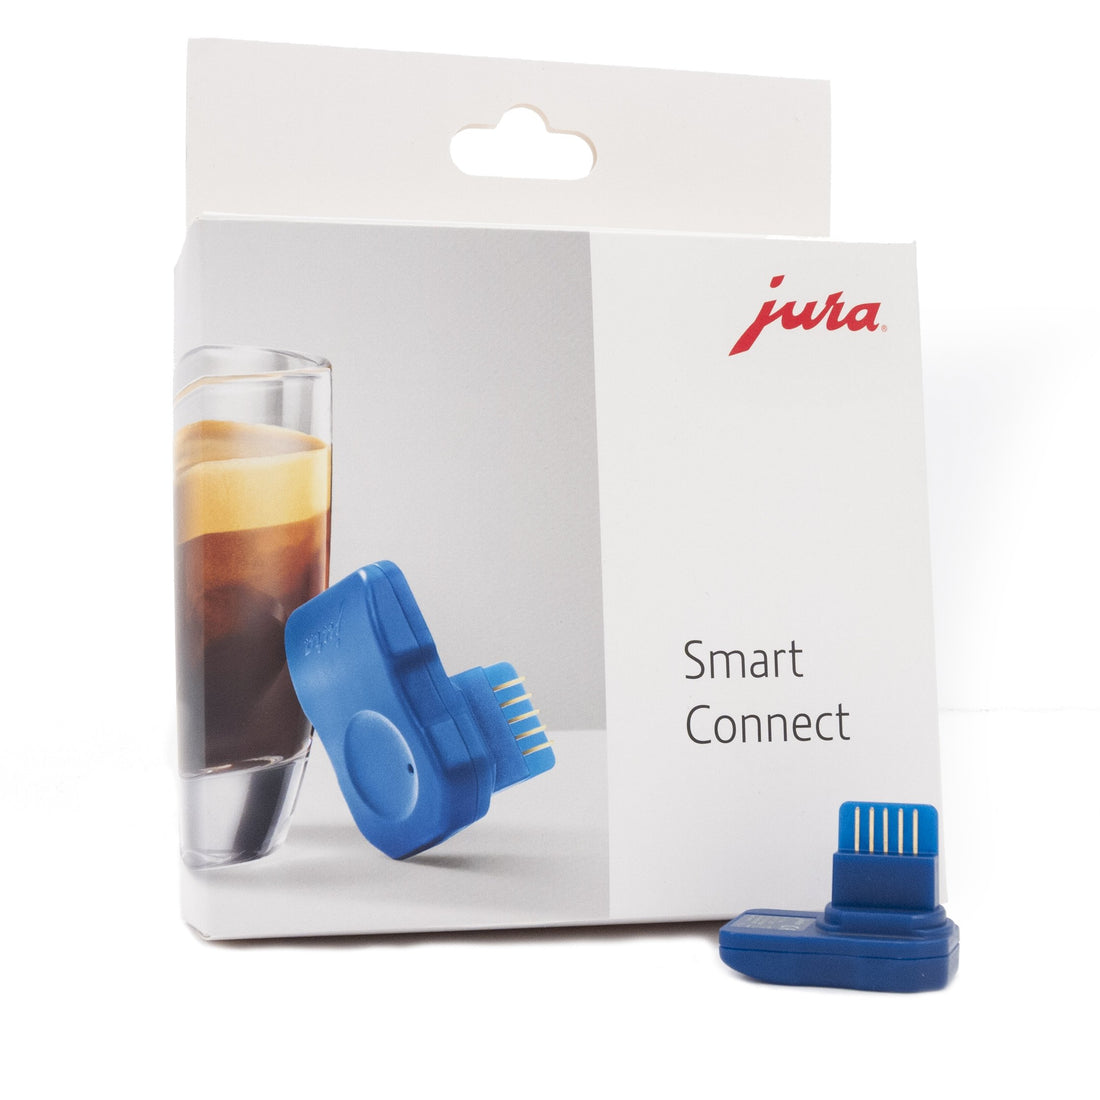 JURA Smart Connect Bluetooth Adapter